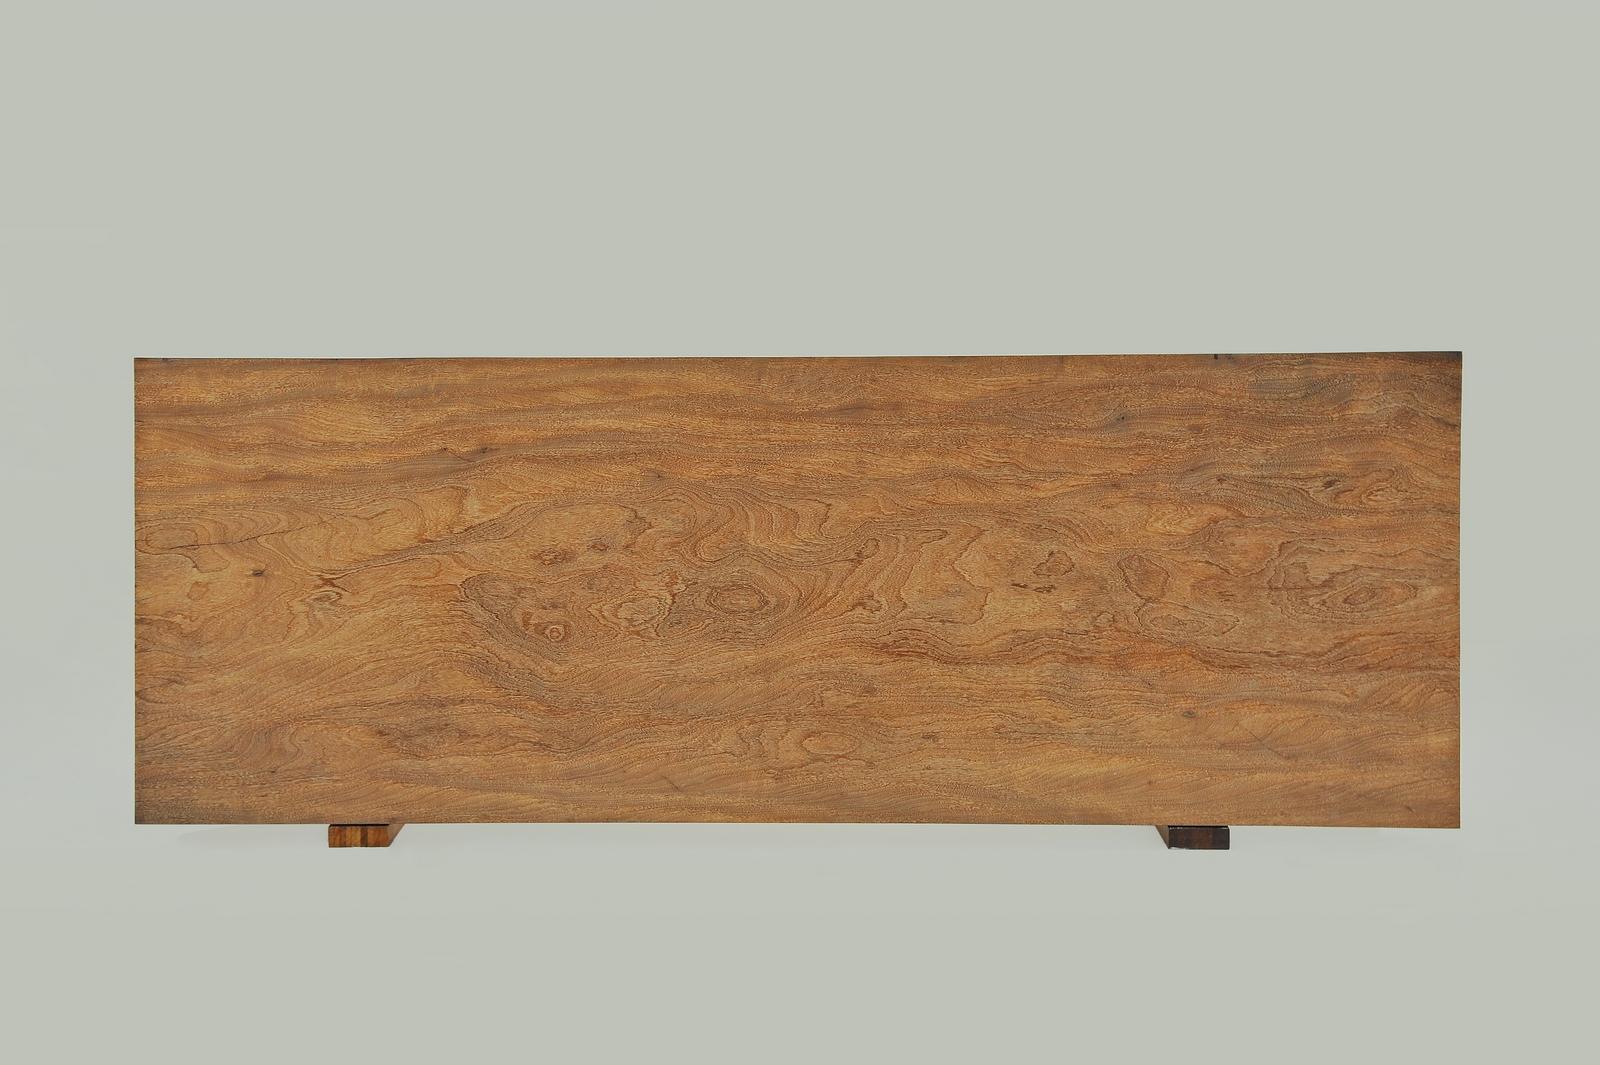 Bespoke Table, Antique Hardwood, Sand cast Aluminum Base by P. Tendercool For Sale 4